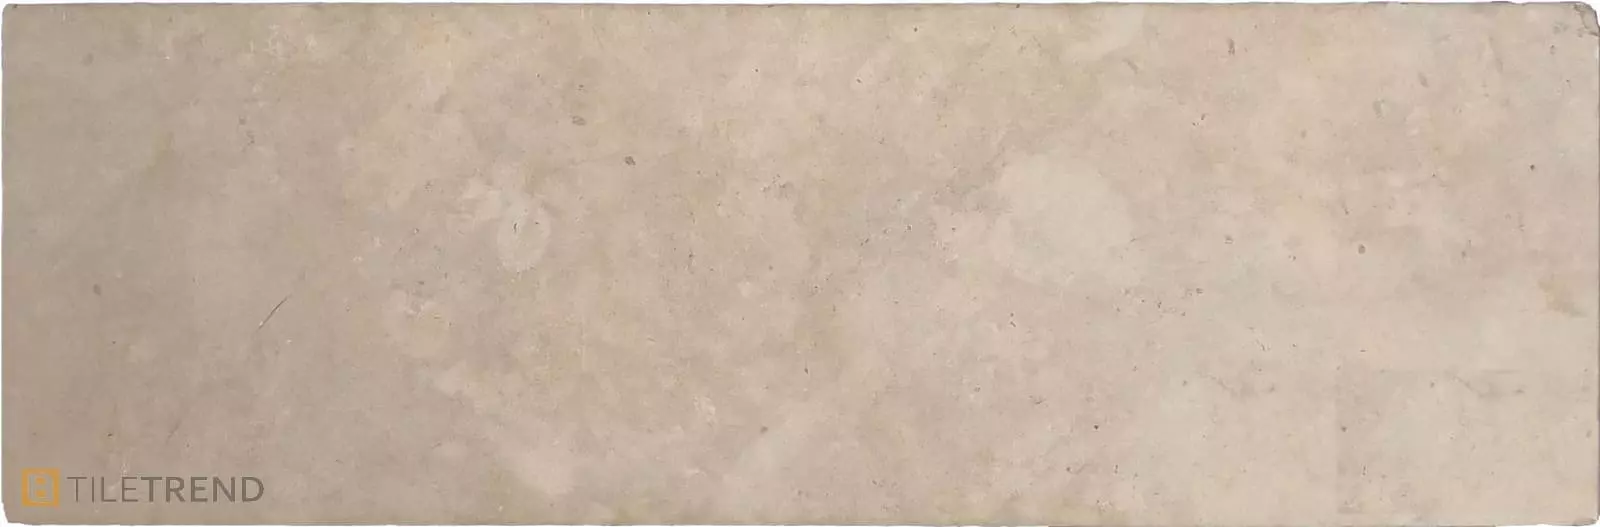 Мраморная плитка Petra Antiqua Marbles Goya Cerato 10x30.5